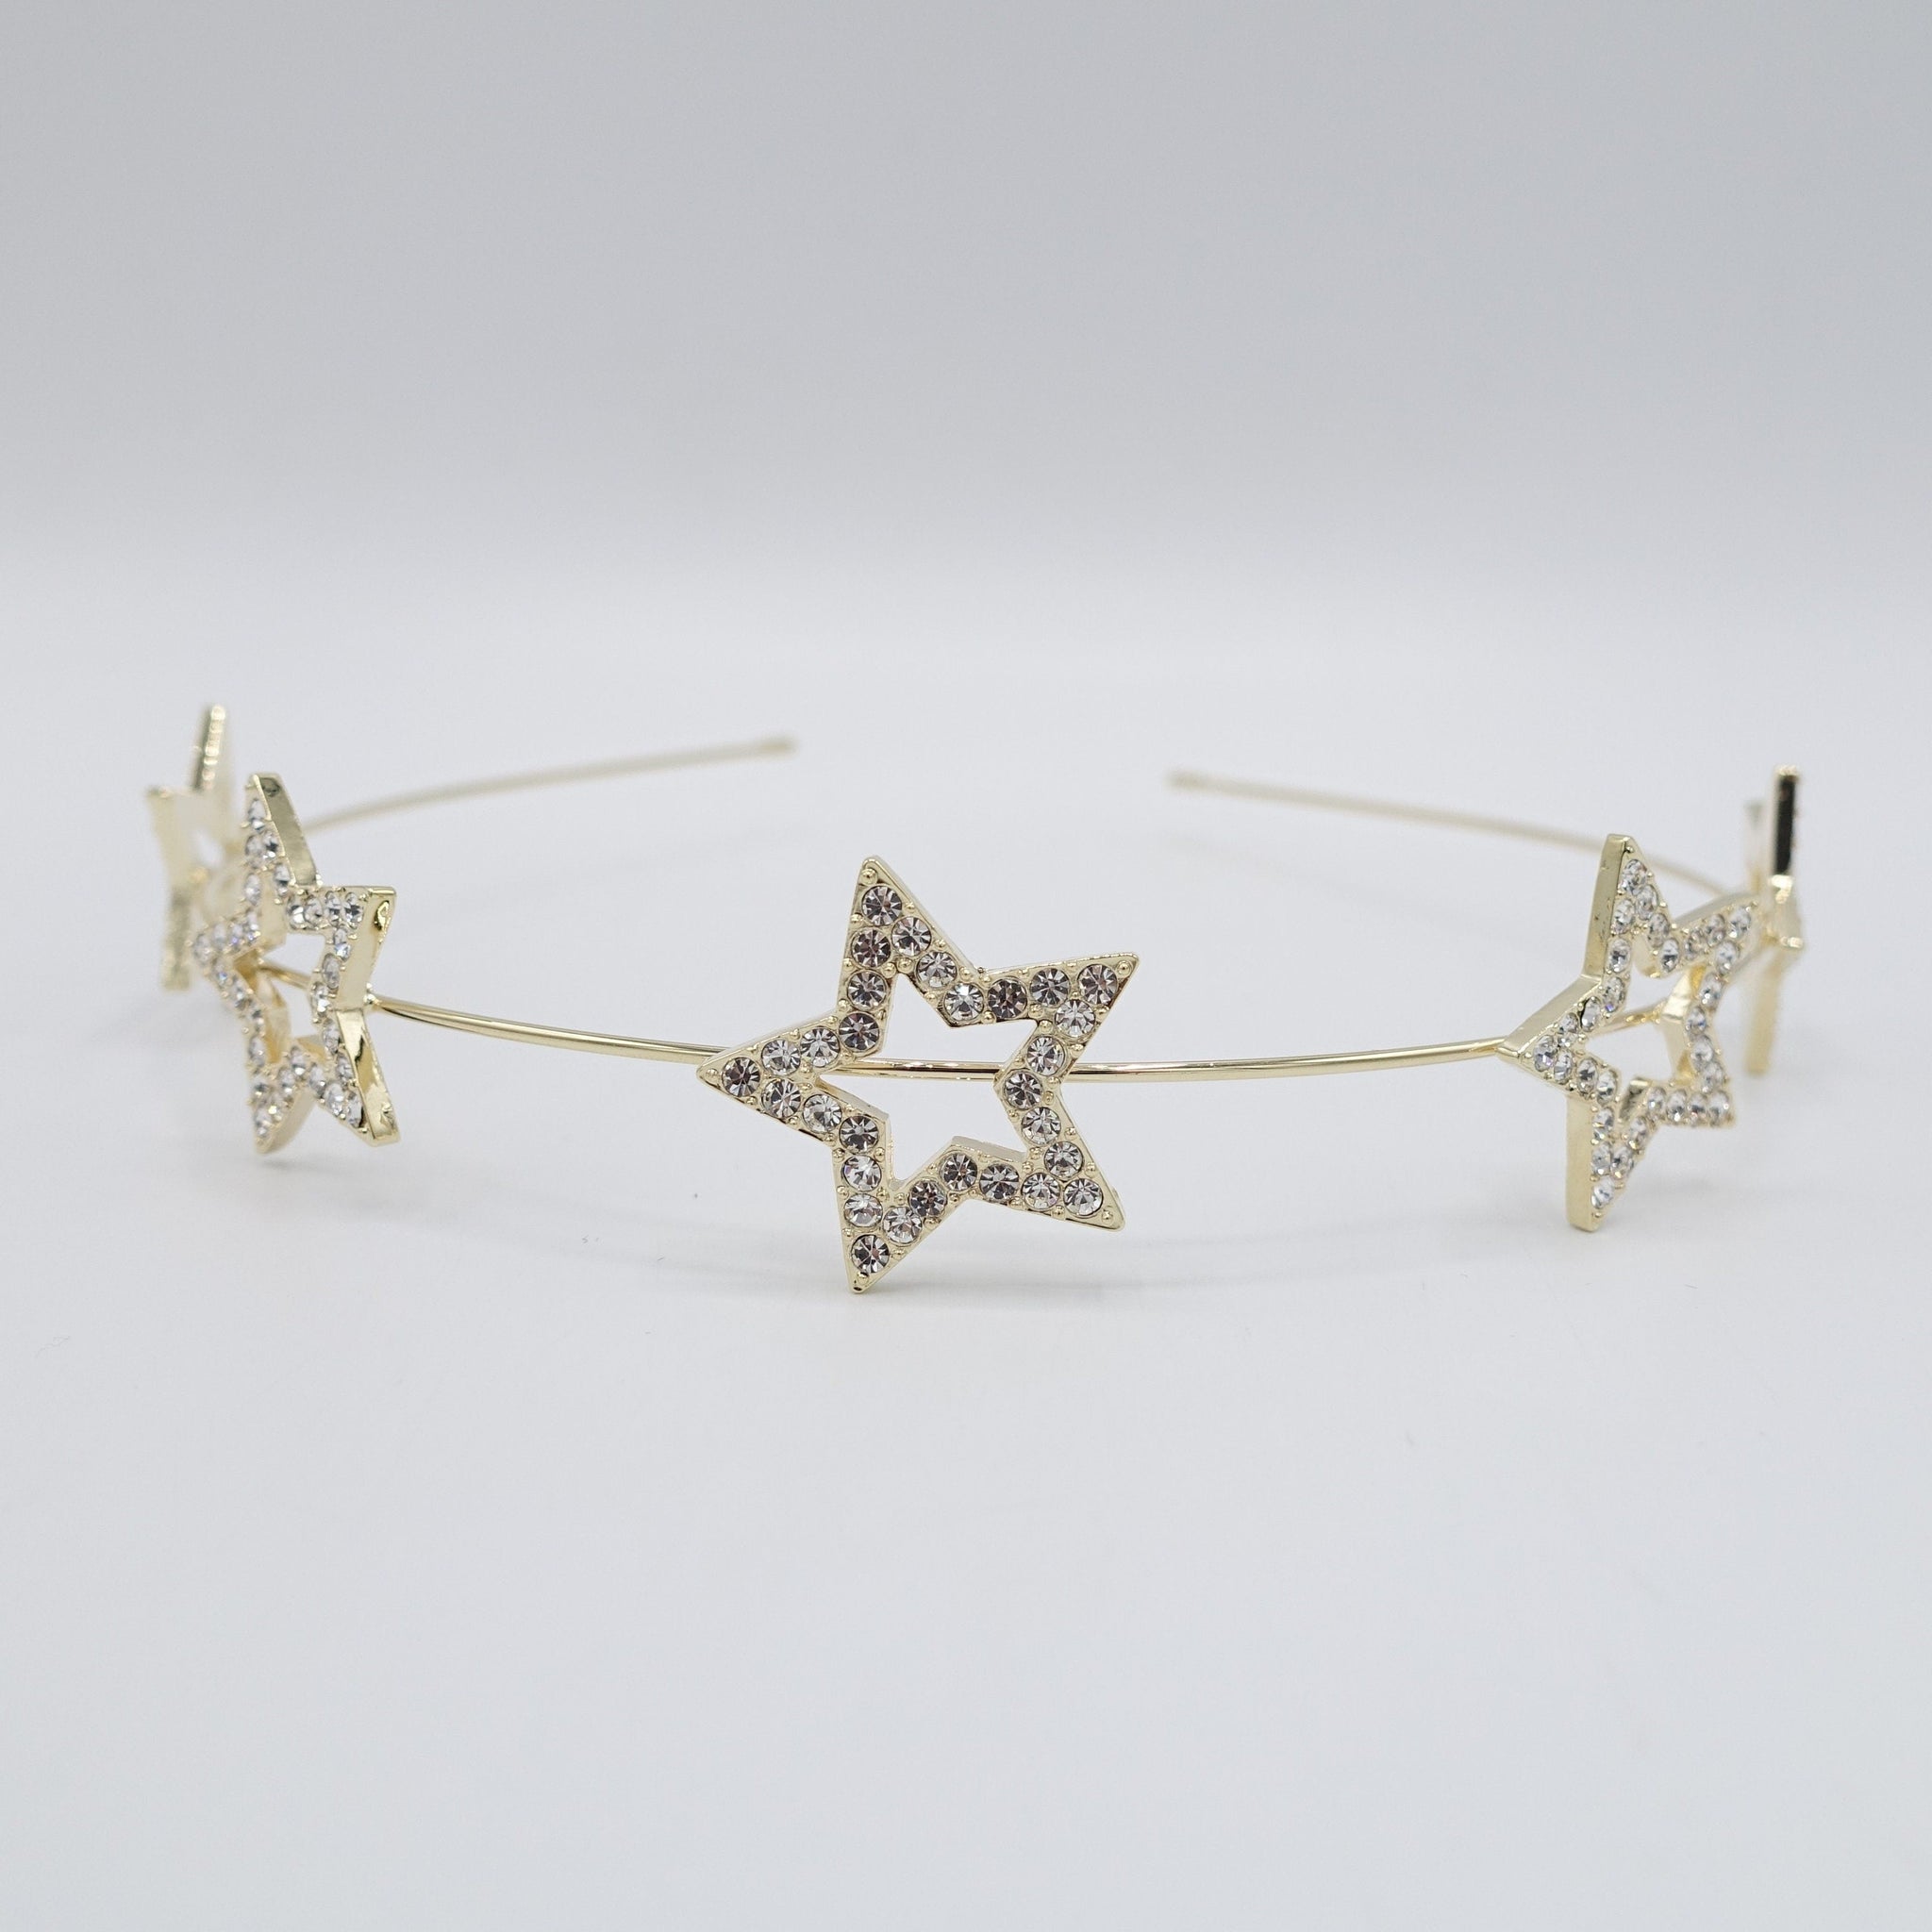 VeryShine Headband Big gold star headband rhinestone embellished hairband for women